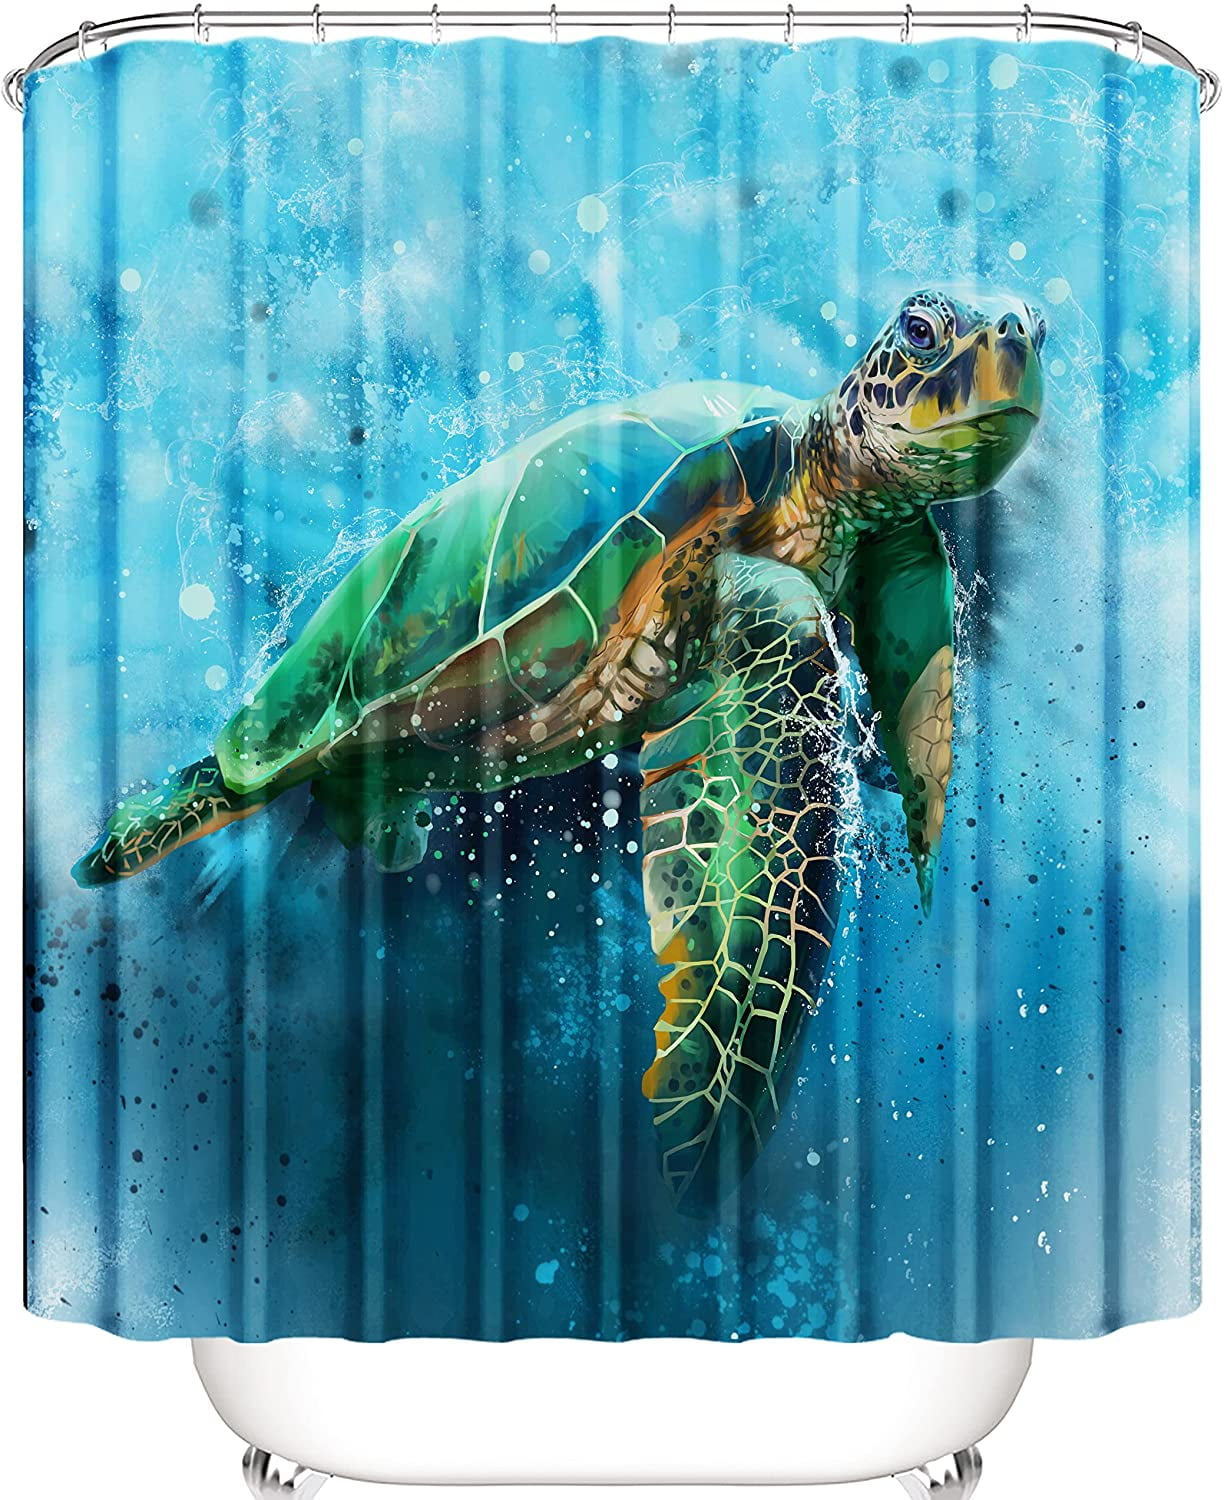 Deep Sea Turtle Shower Curtain Set Bathroom Fabric Curtains 71X71 inches Liner 